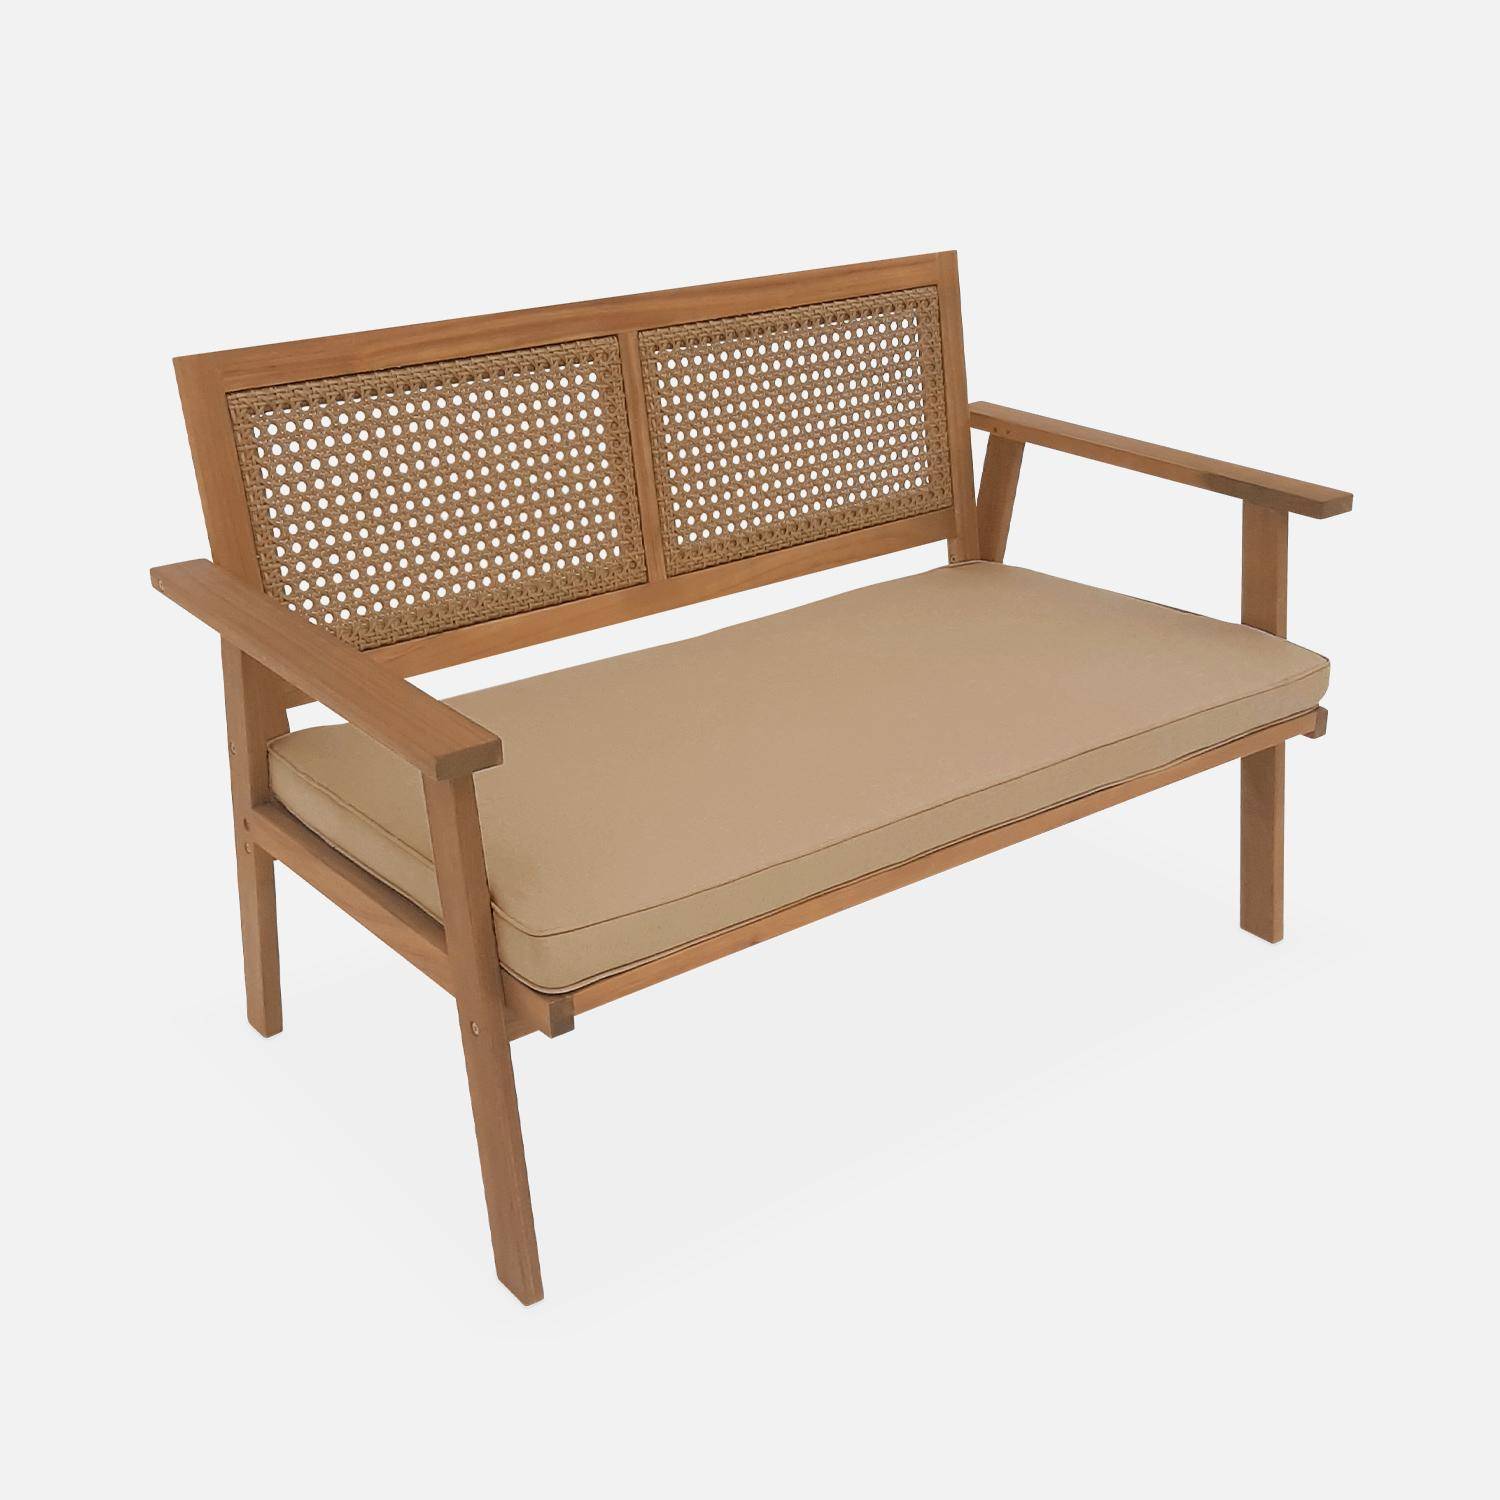 4-seater wood and cane rattan garden sofa set, Teak colour,sweeek,Photo5